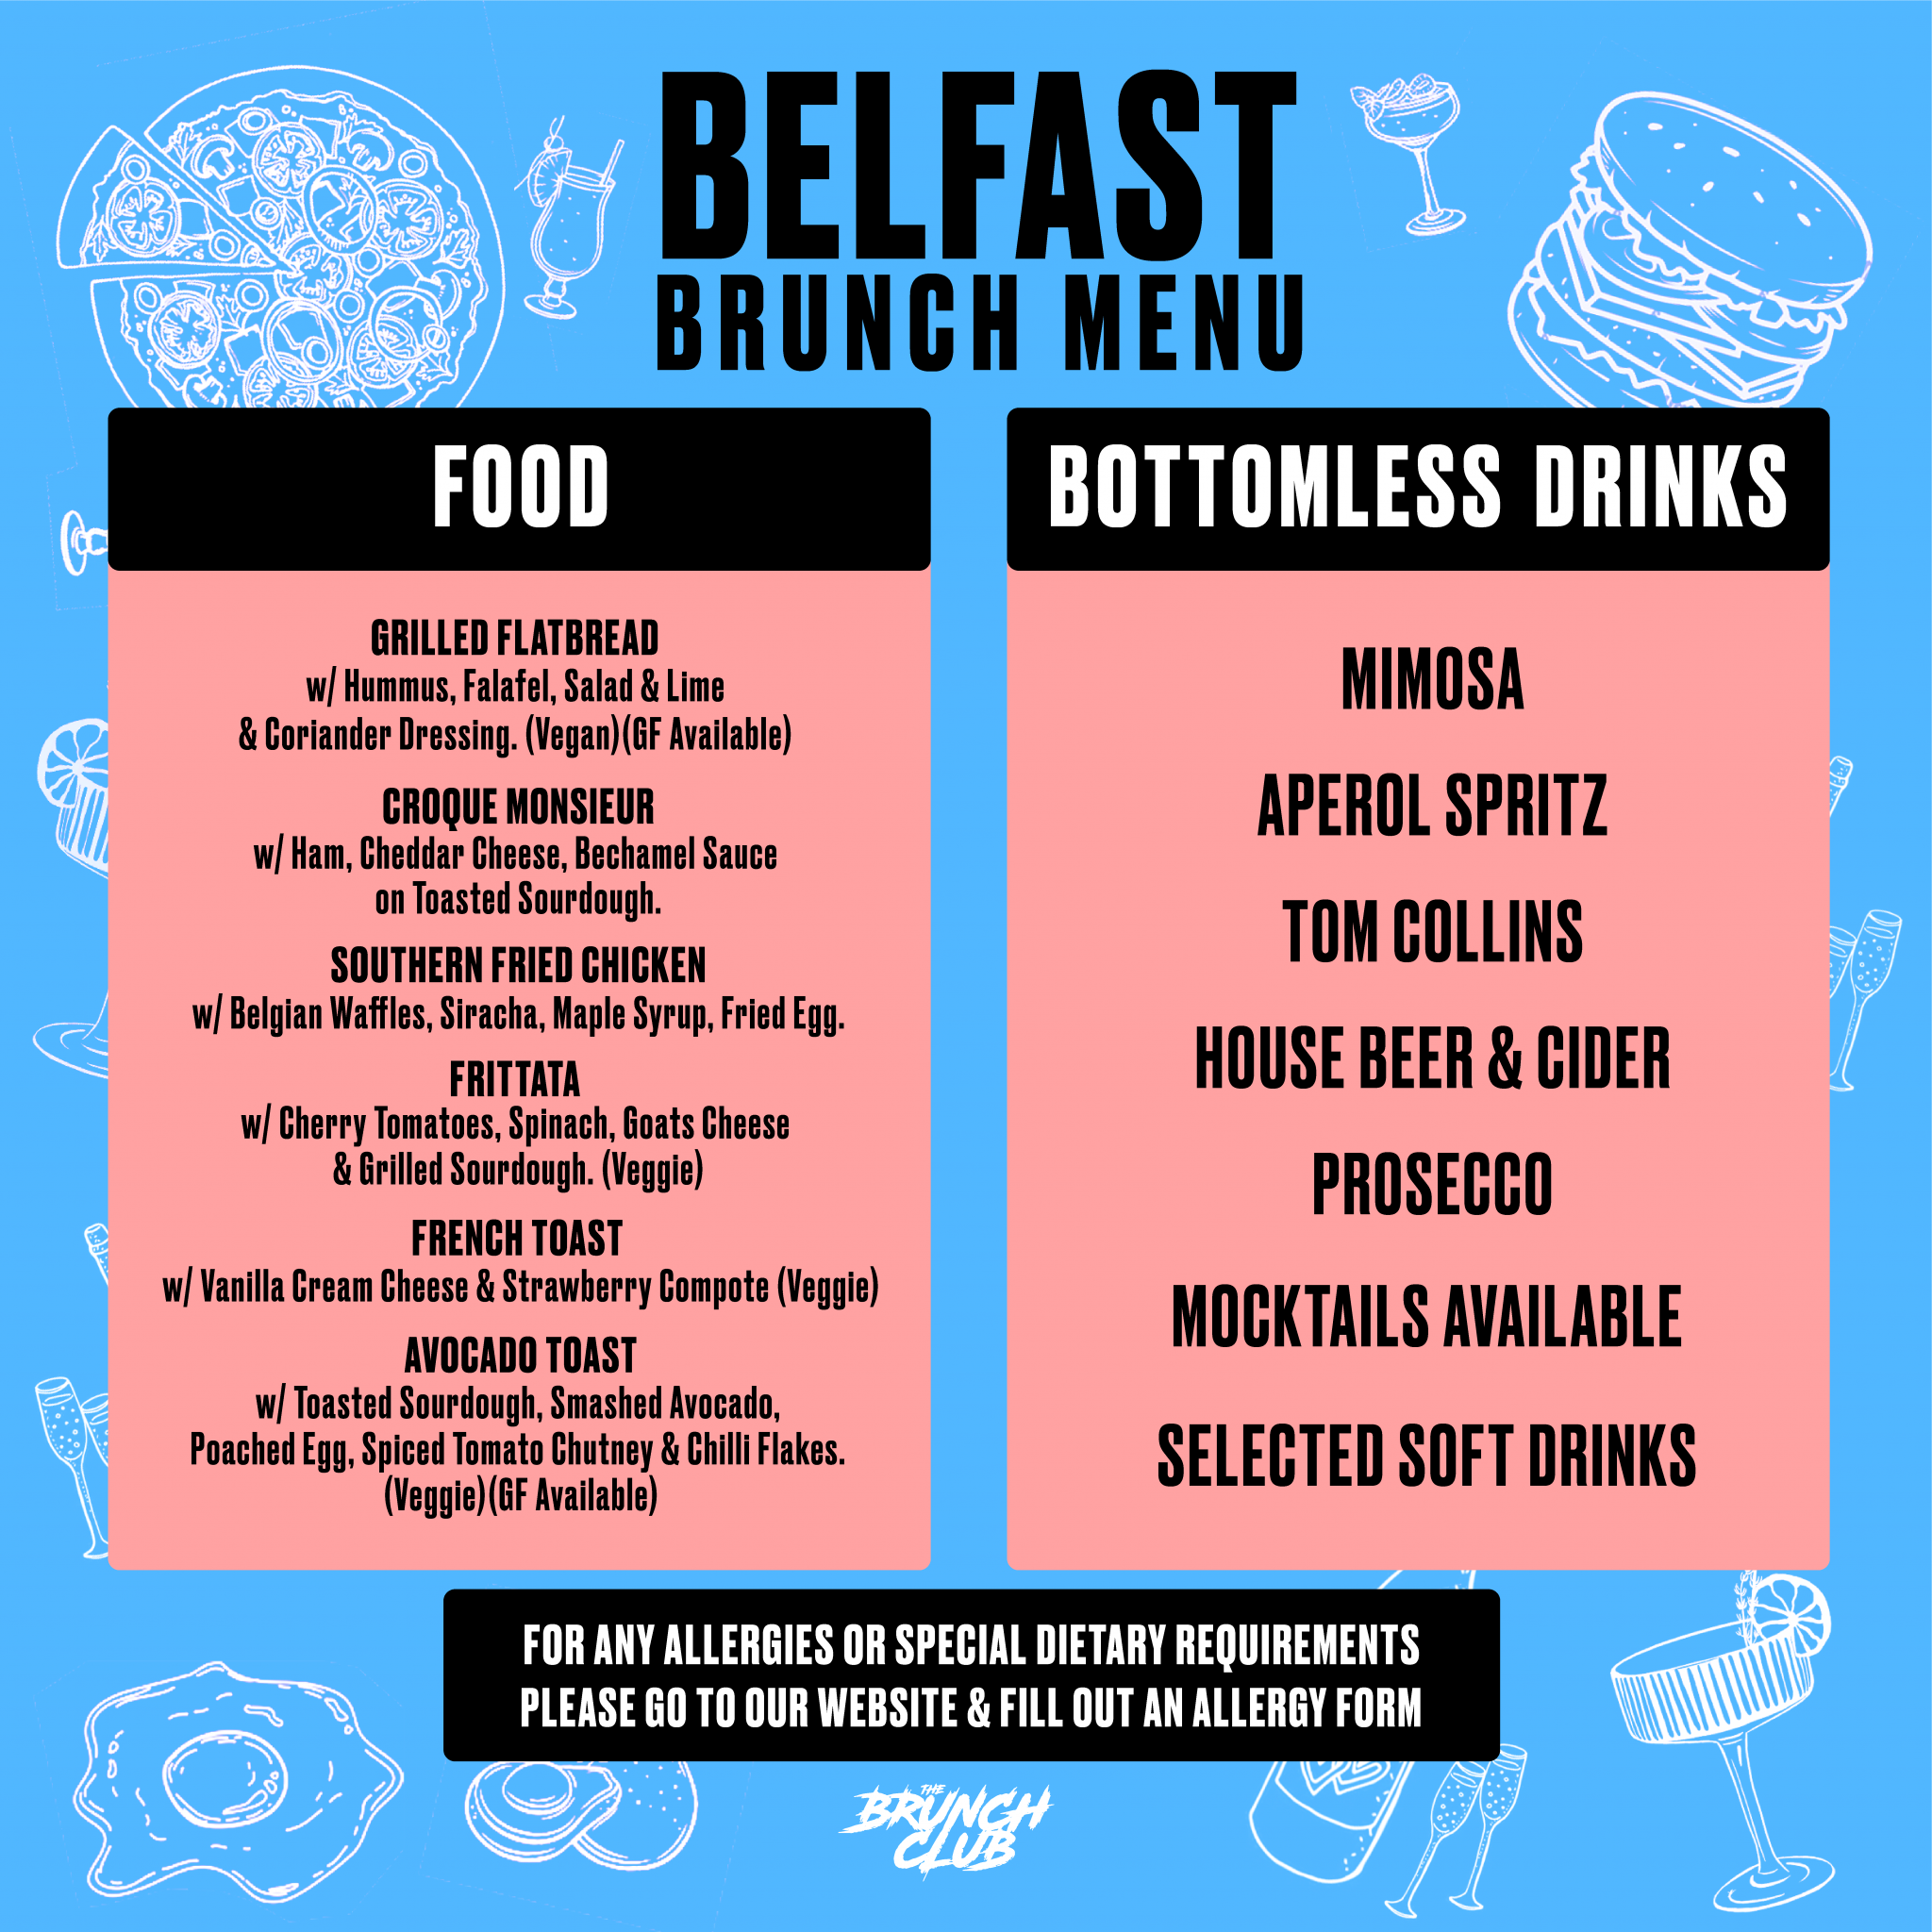 90's Baby Bottomless Brunch  - Belfast